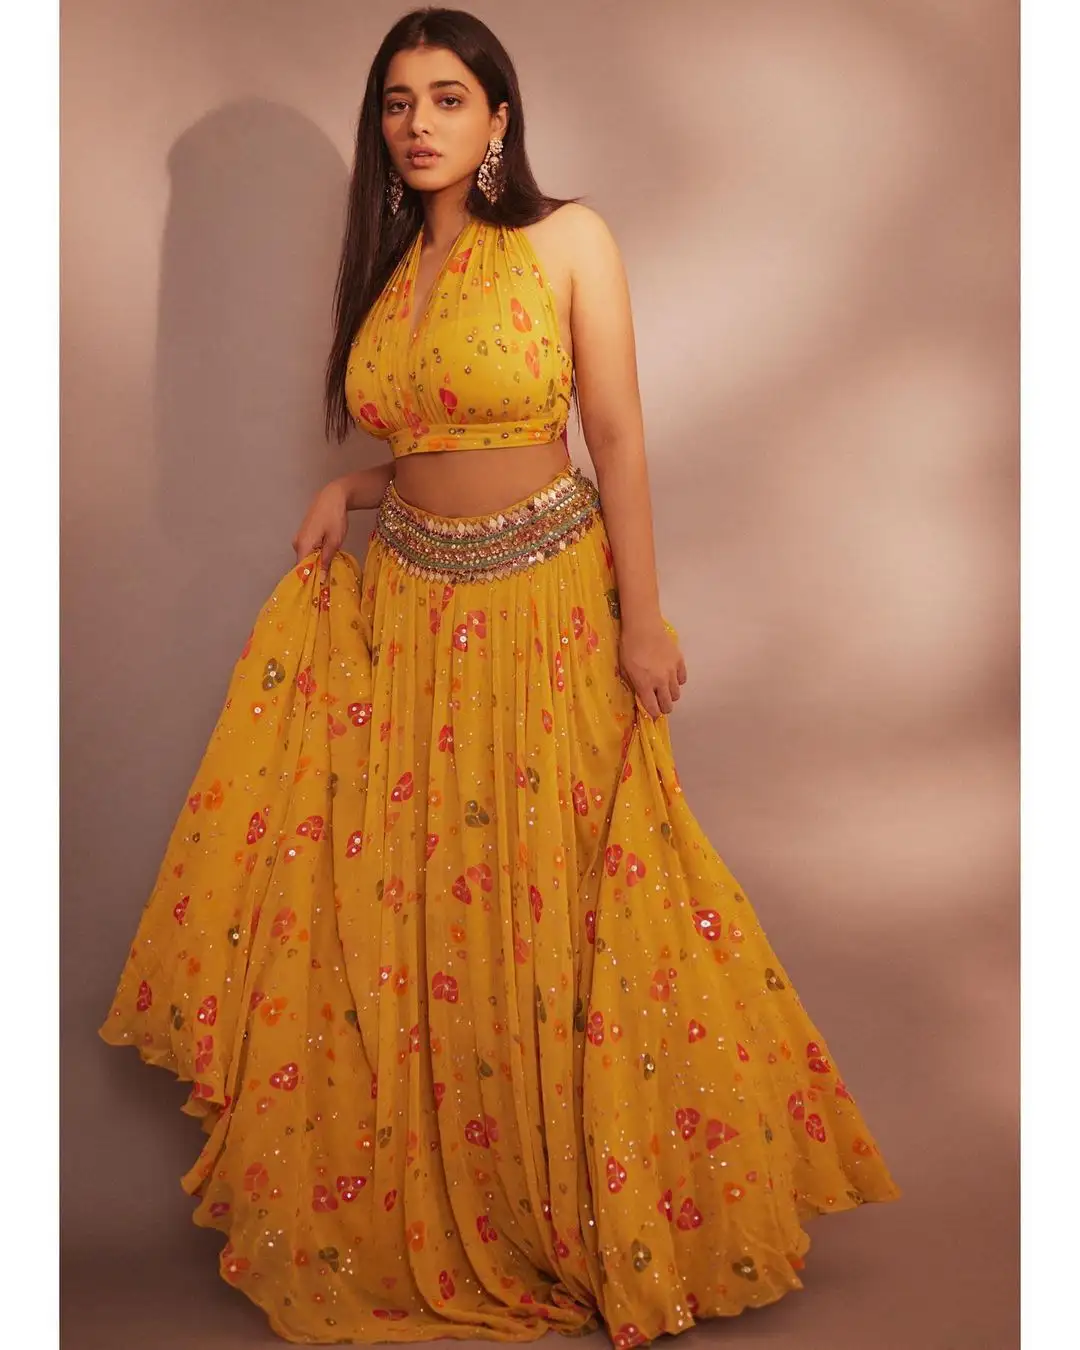 Kethika Sharma Photoshoot in variety Traditional Dress